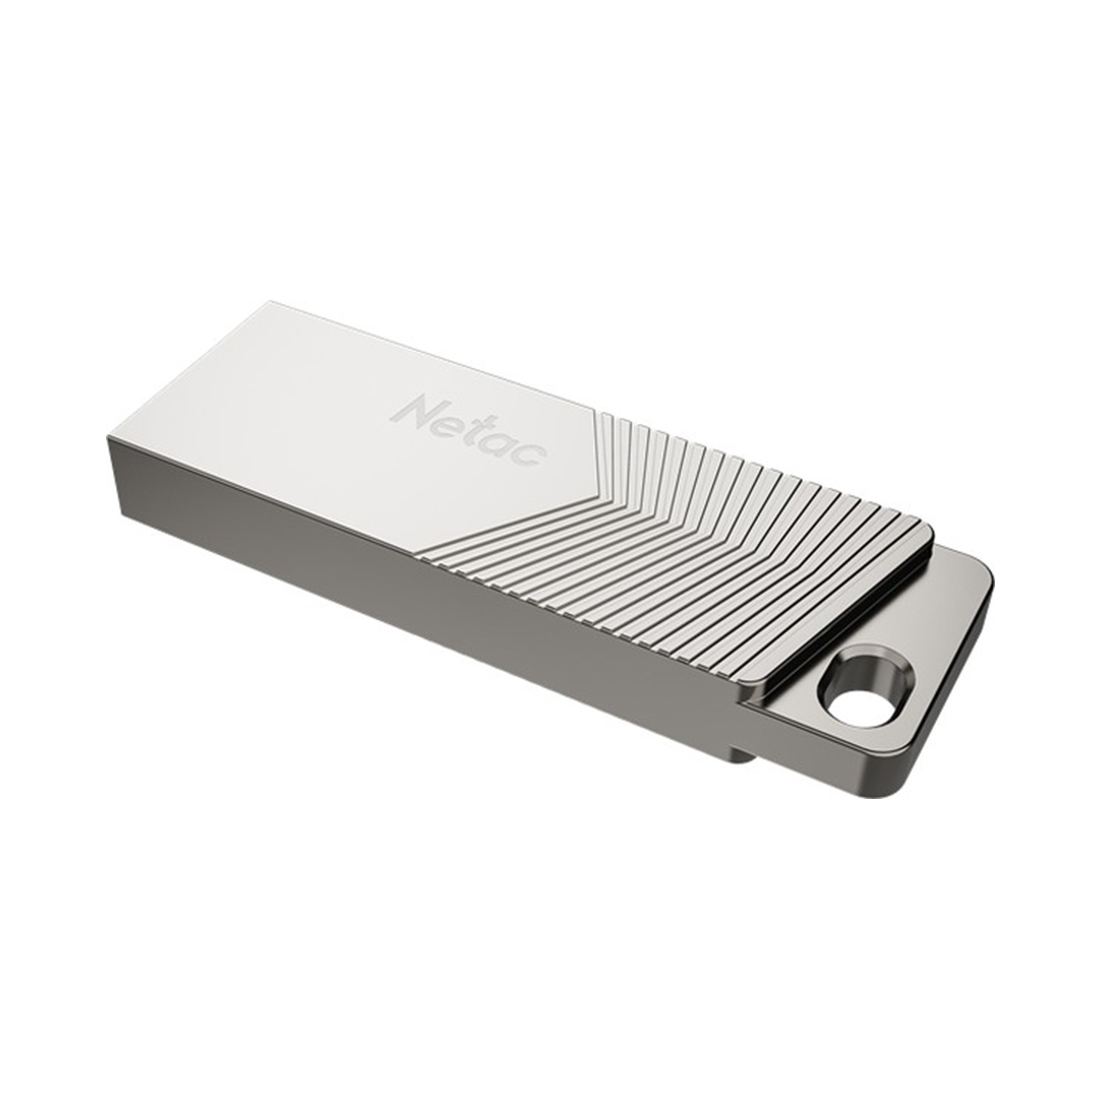 USB-накопитель Netac NT03UM1N-032G-32PN 32GB